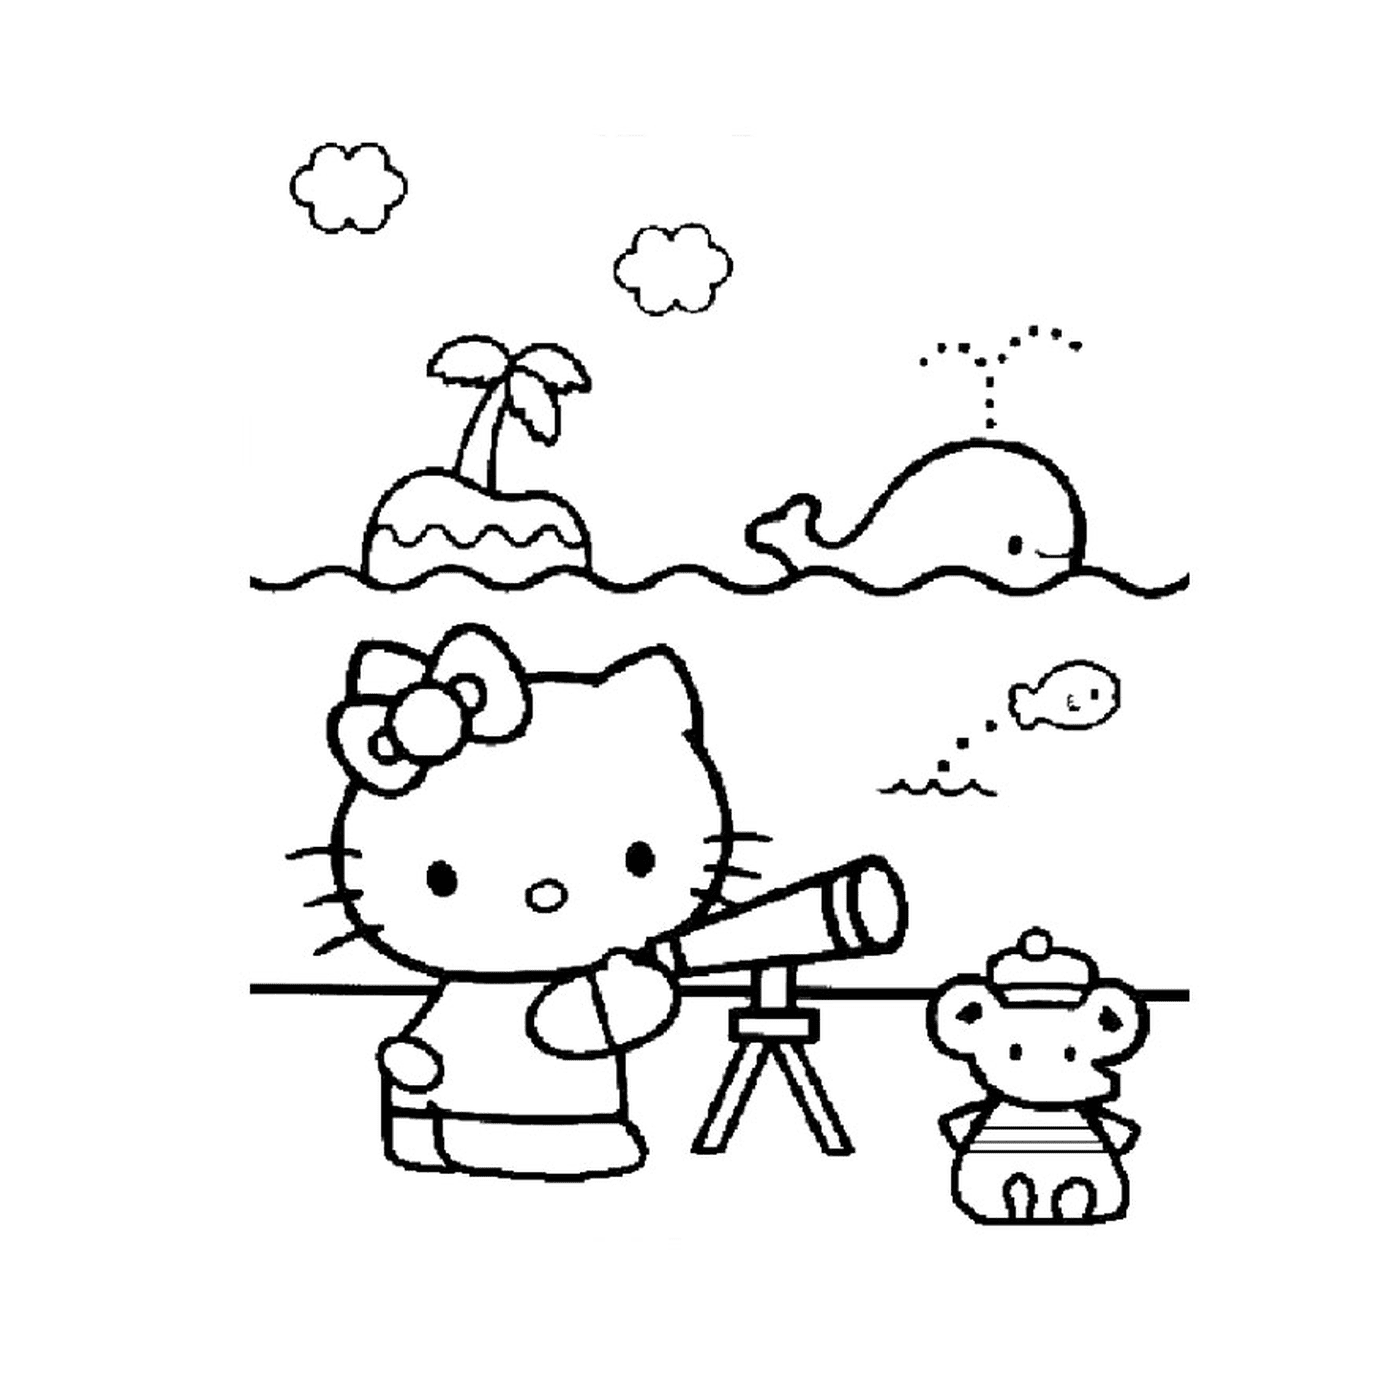  Hello Kitty looking through a telescope to a teddy bear 